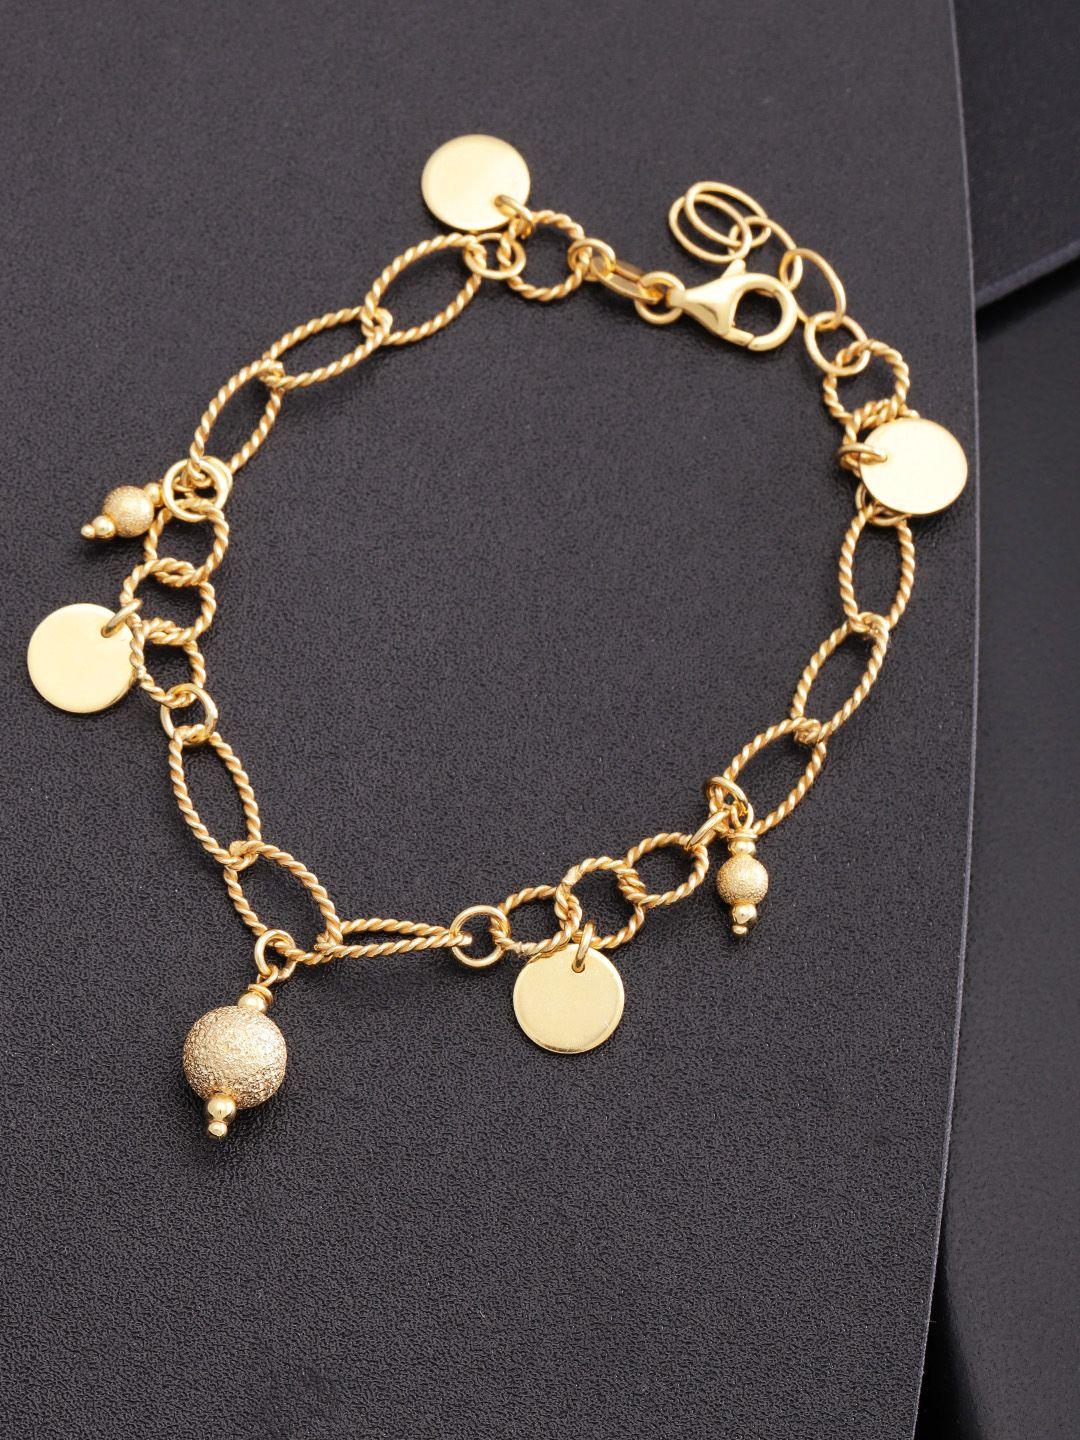 carlton-london-gold-plated-charm-bracelet